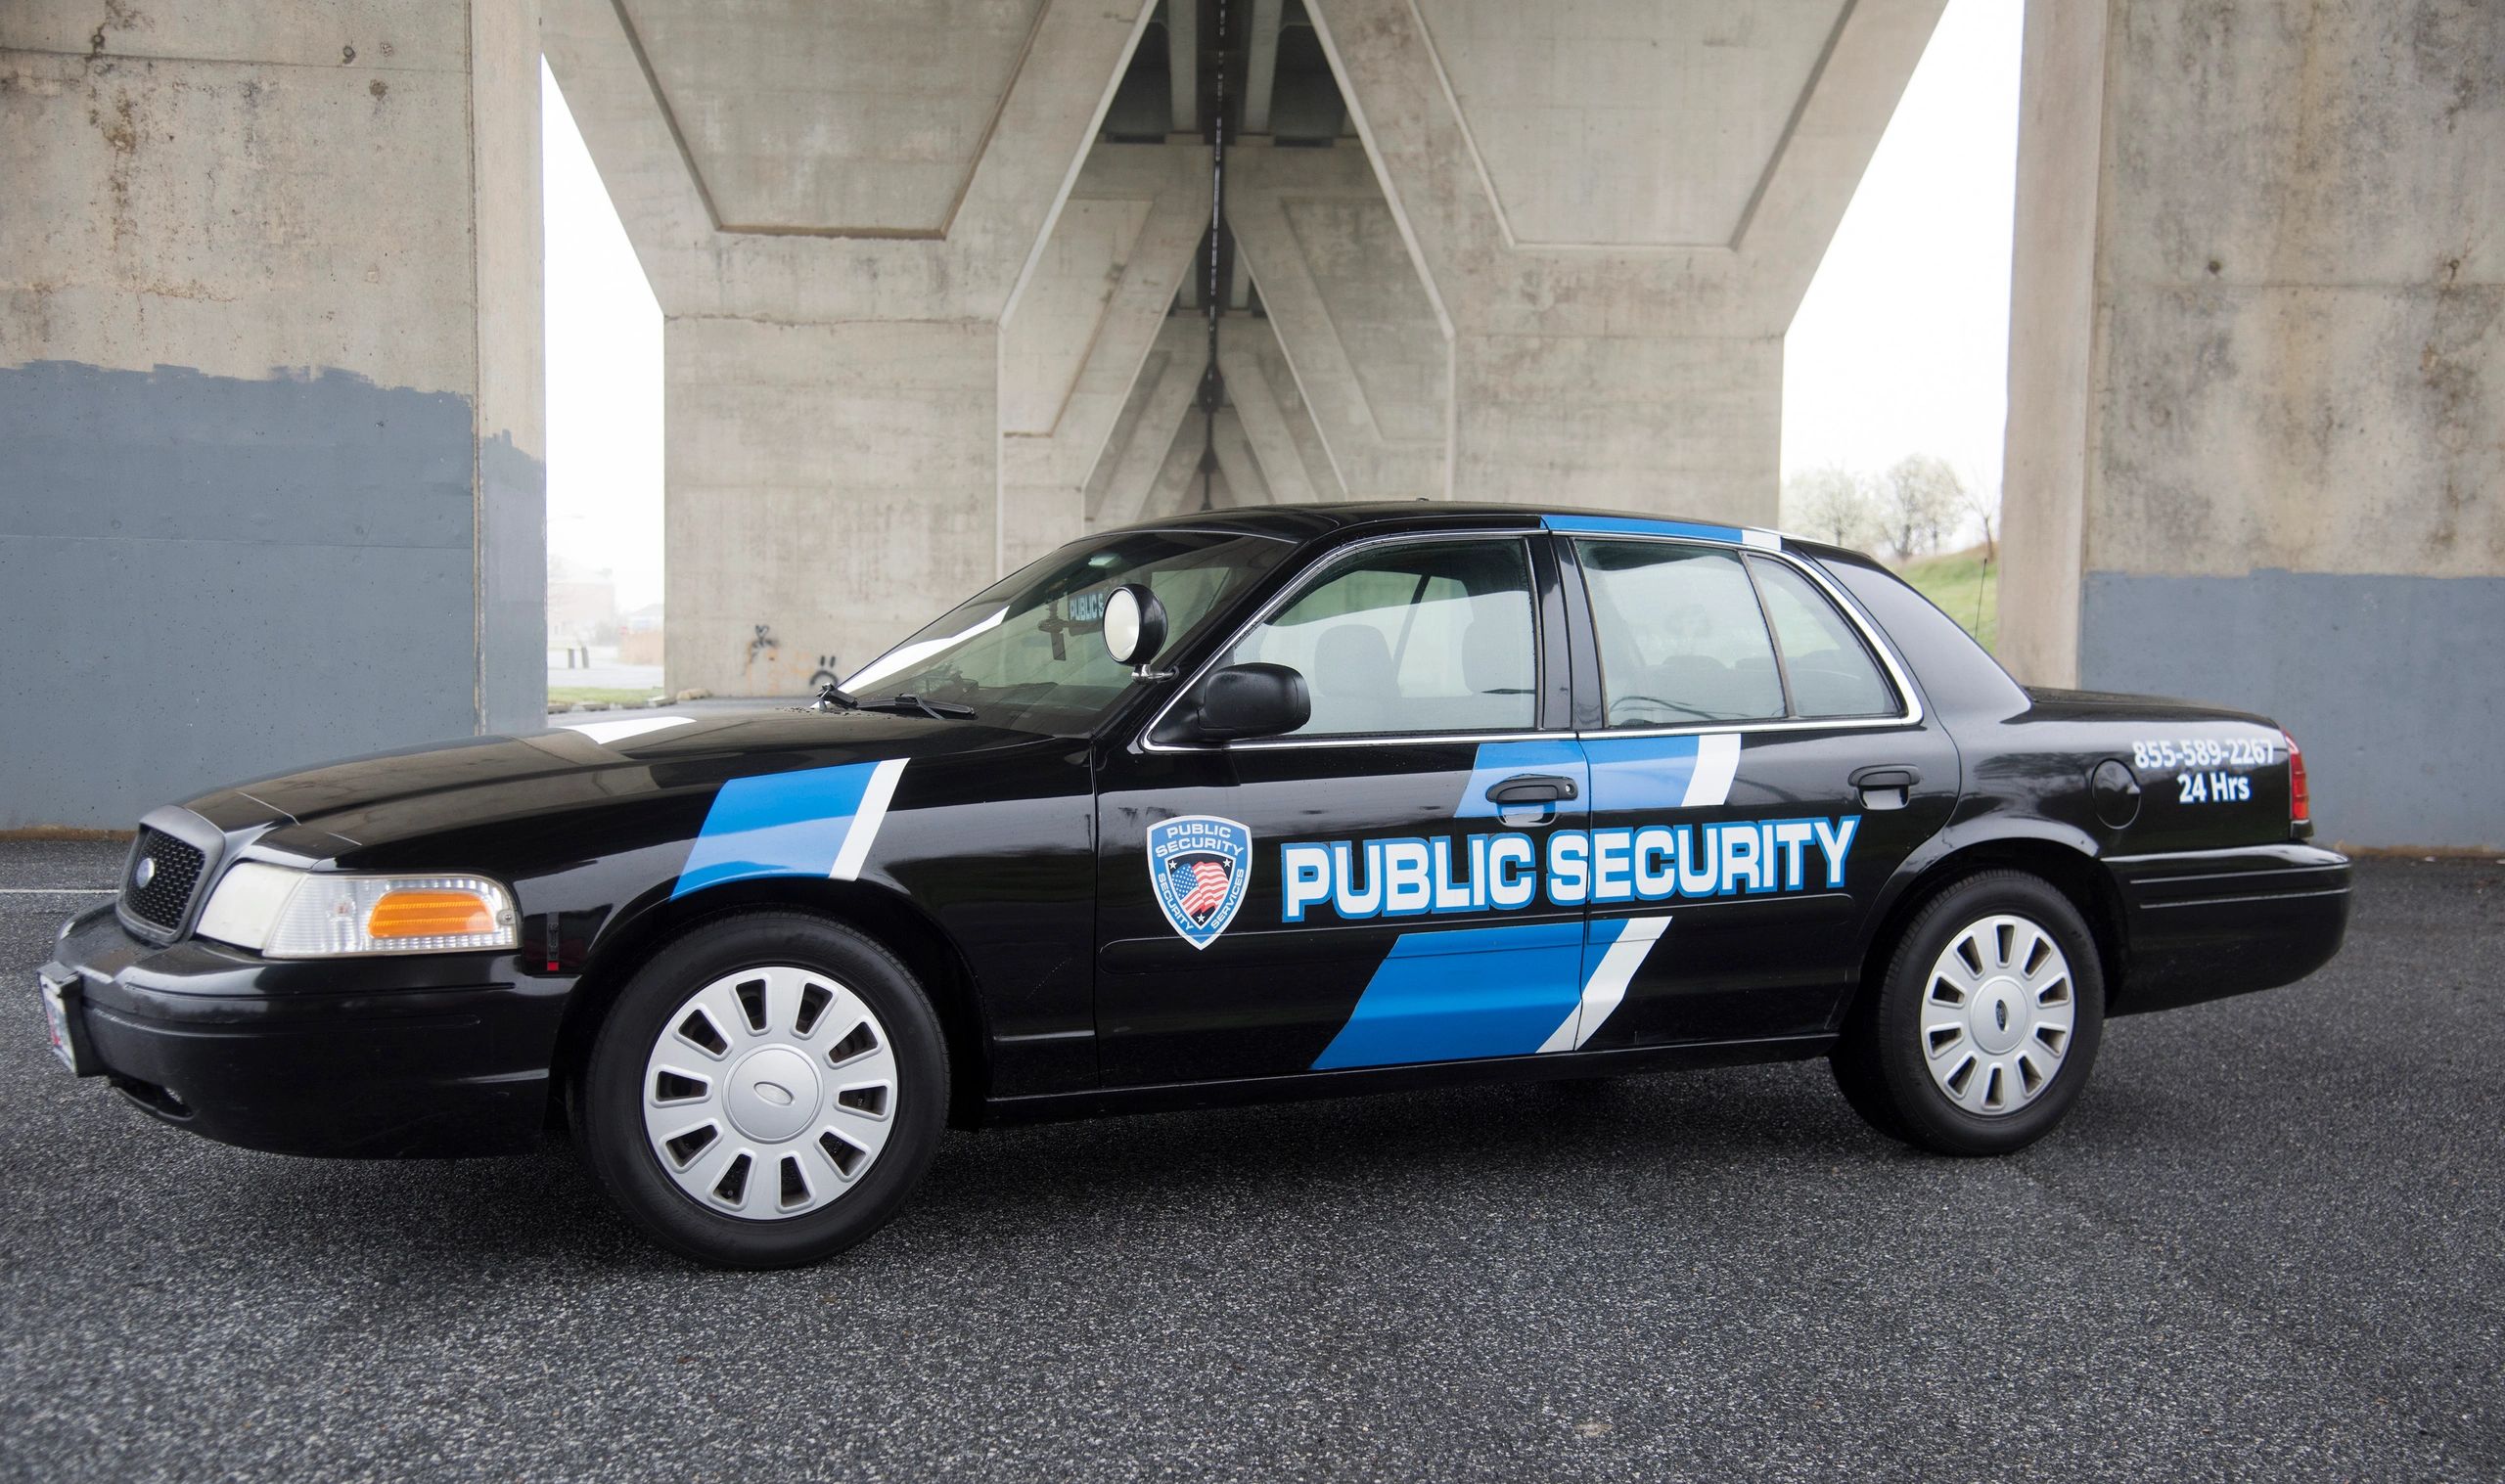 Public Security LLC
Security Services
855-589-2267
www.publicsecurityllc.com